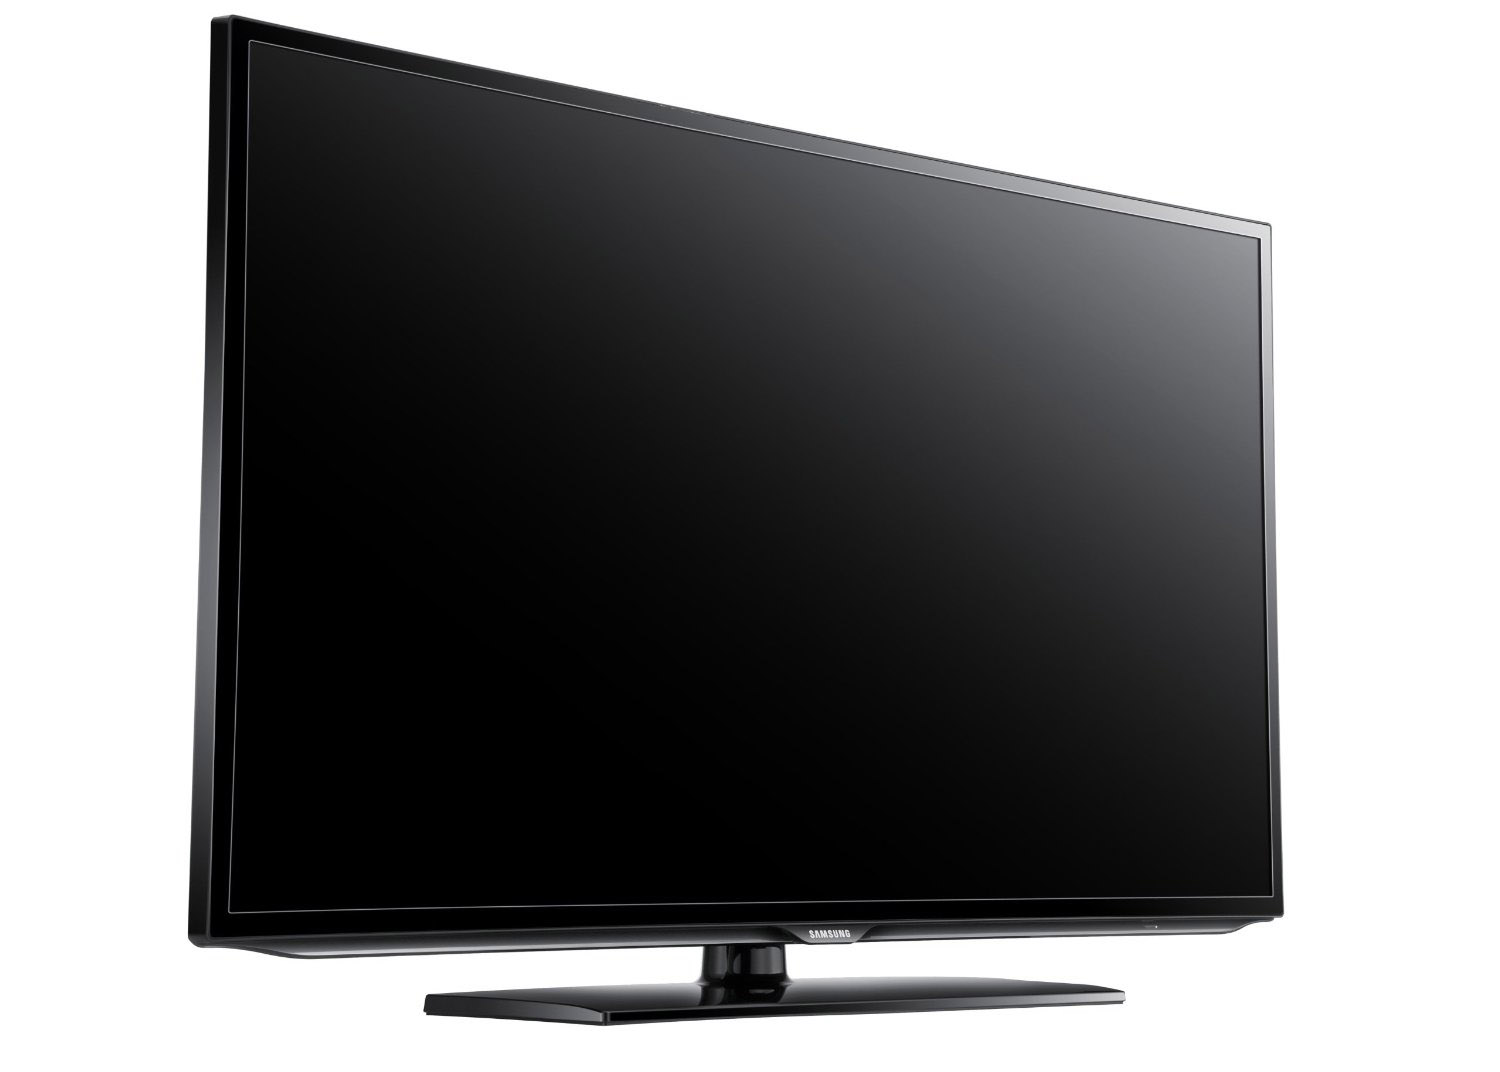 flat screen tv wholesale